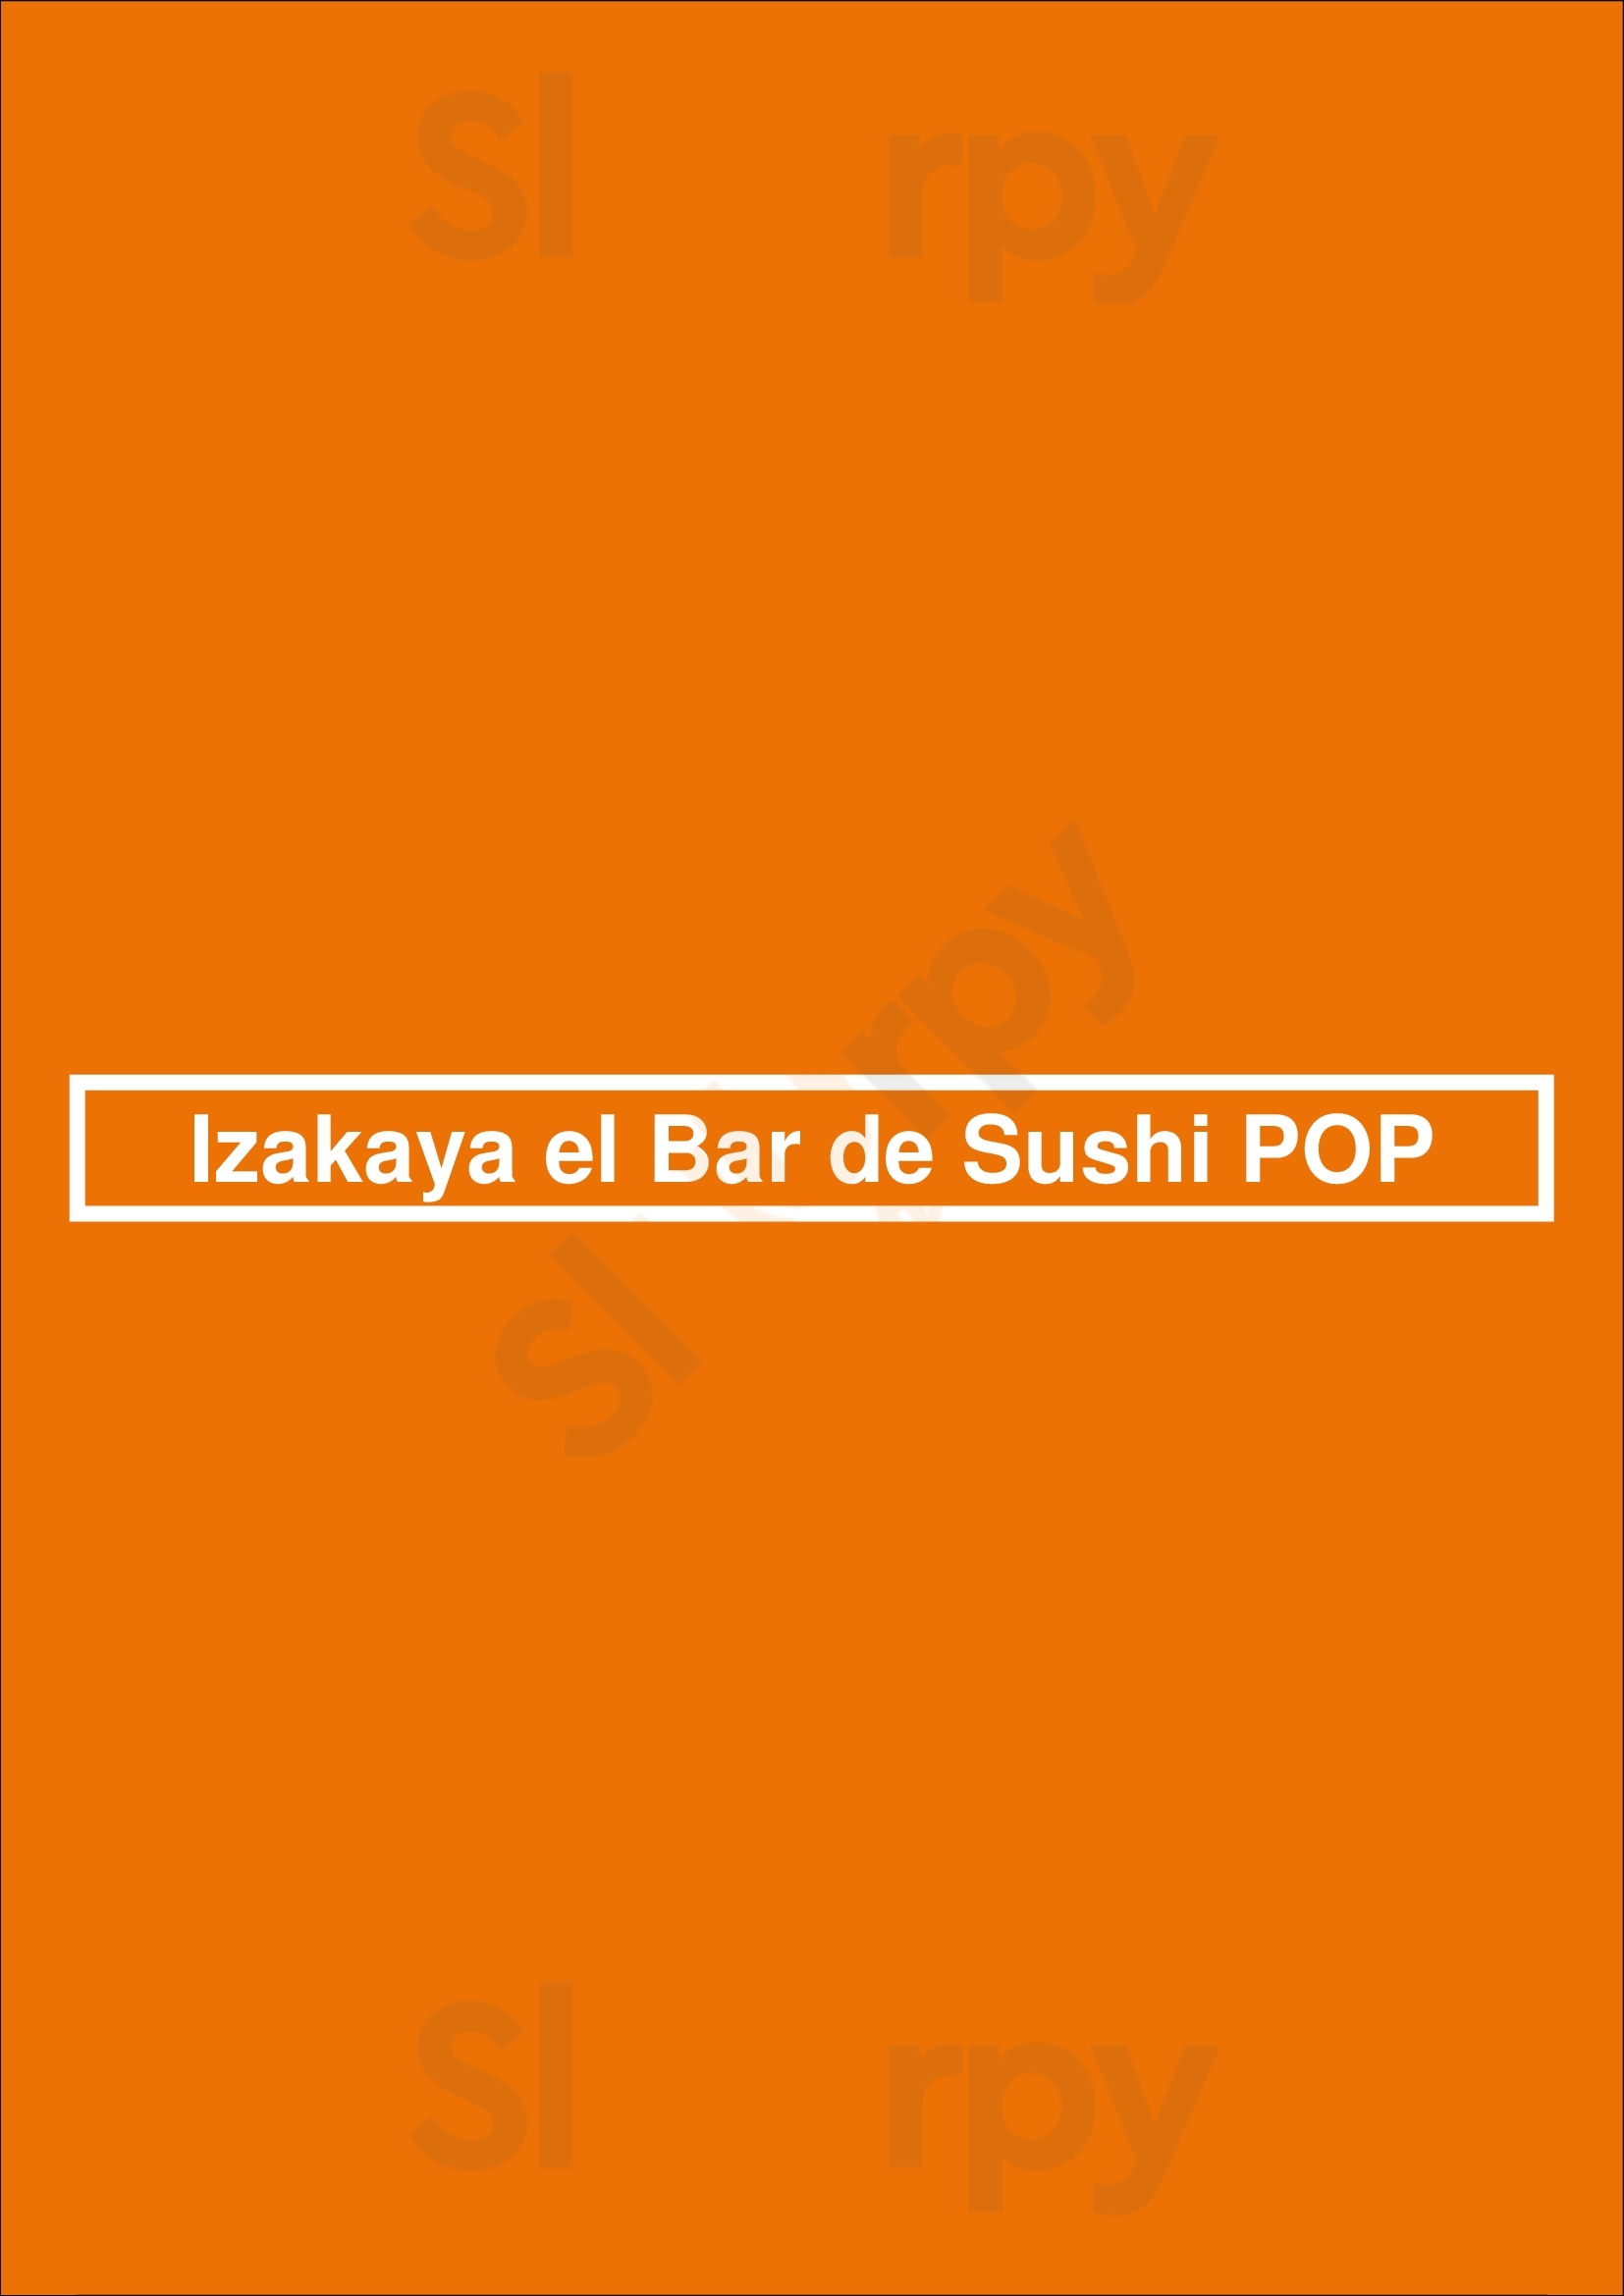 Izakaya El Bar De Sushi Pop Buenos Aires Menu - 1